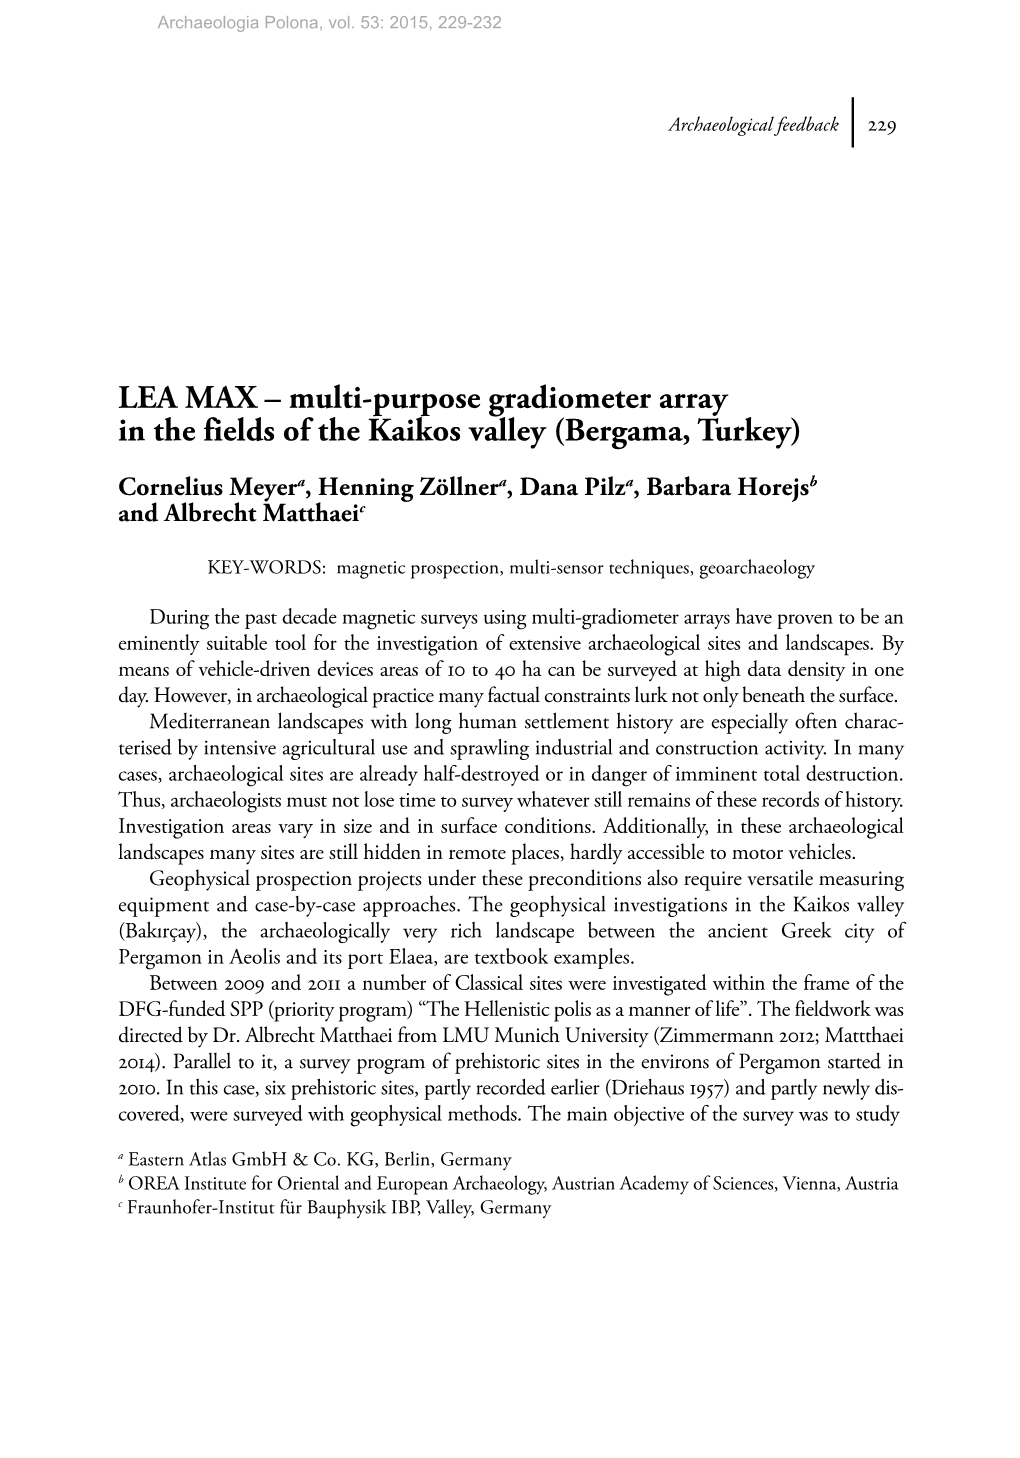 LEA MAX – Multi-Purpose Gradiometer Array in the Fields of the Kaikos Valley (Bergama, Turkey)